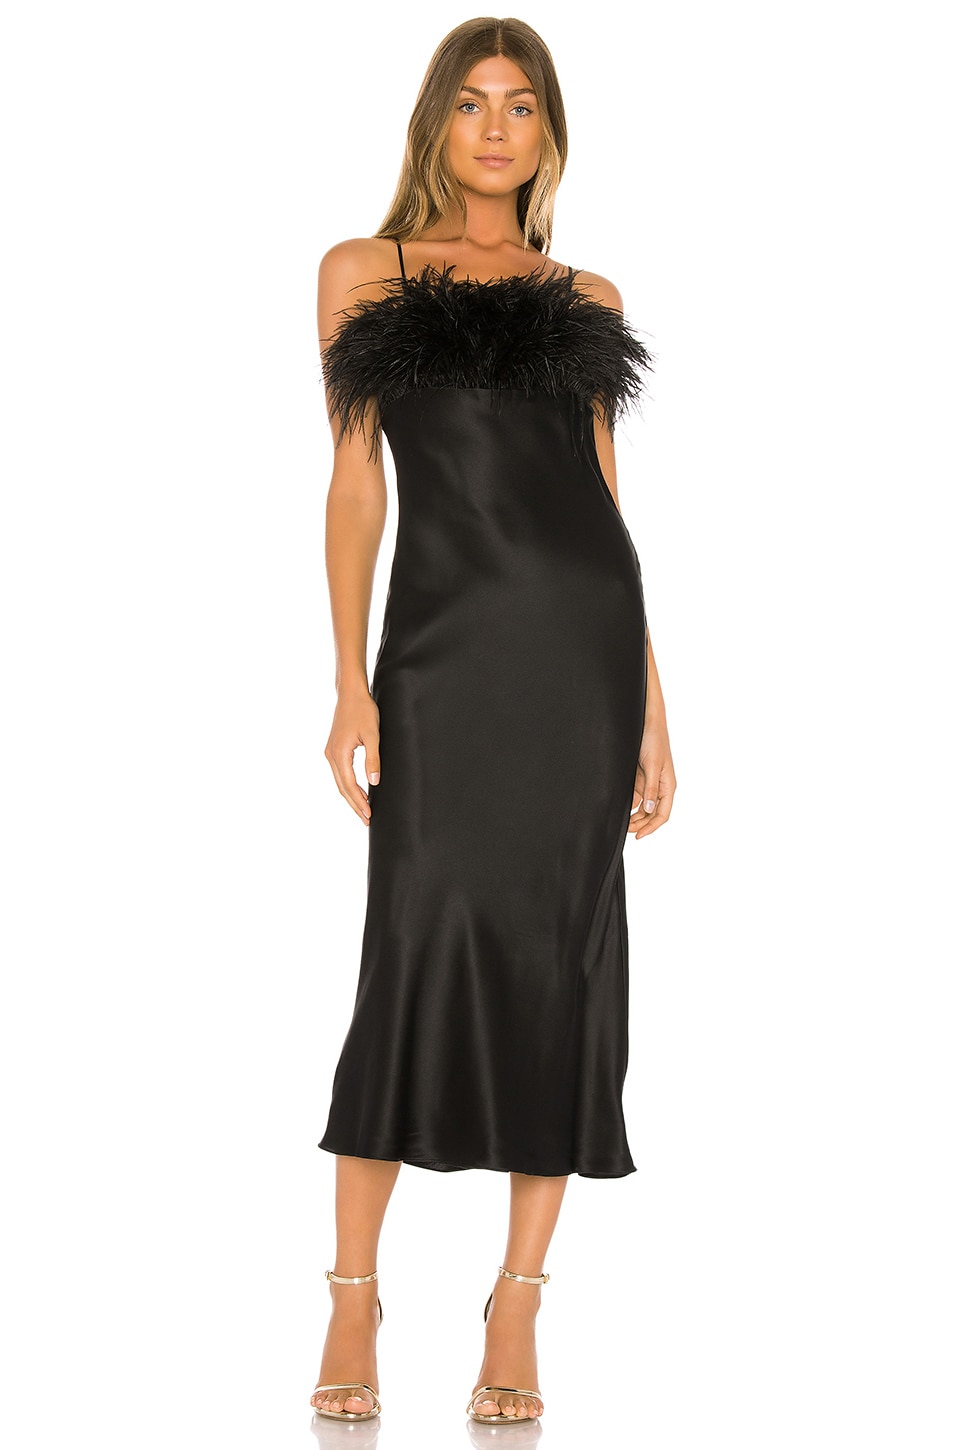 Cinq a Sept Cerise Dress in Black | REVOLVE